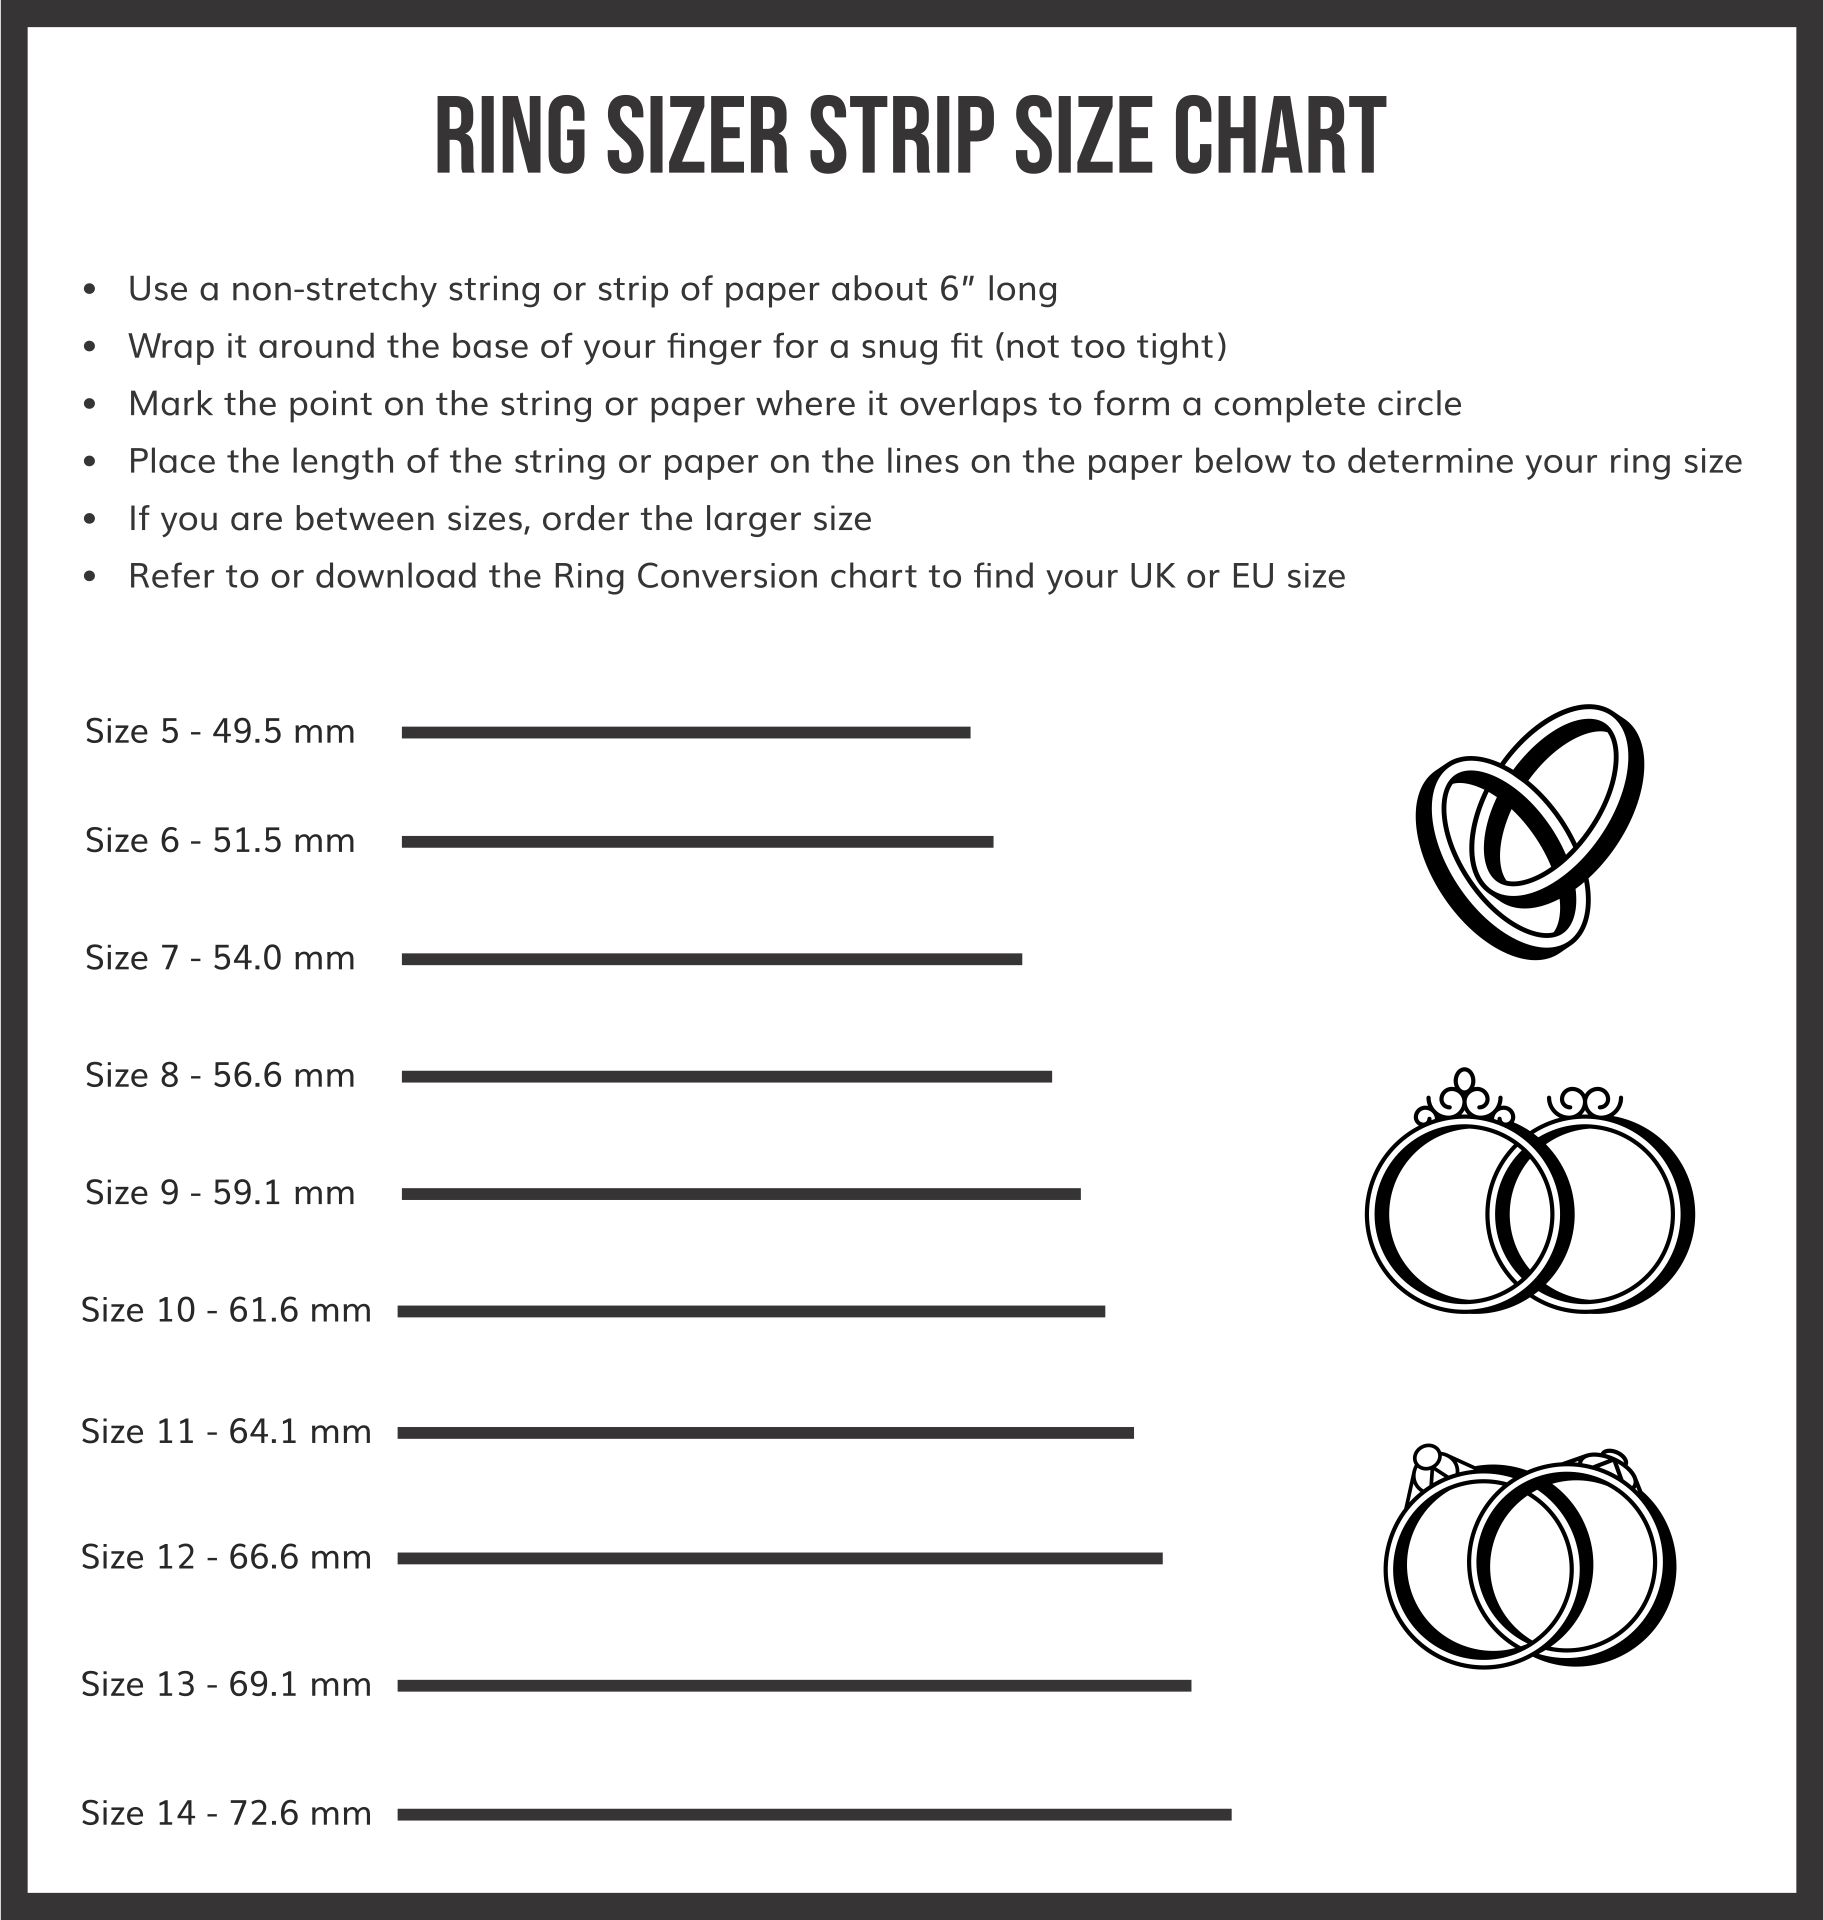 Printable Ring Sizer Strip Size Chart